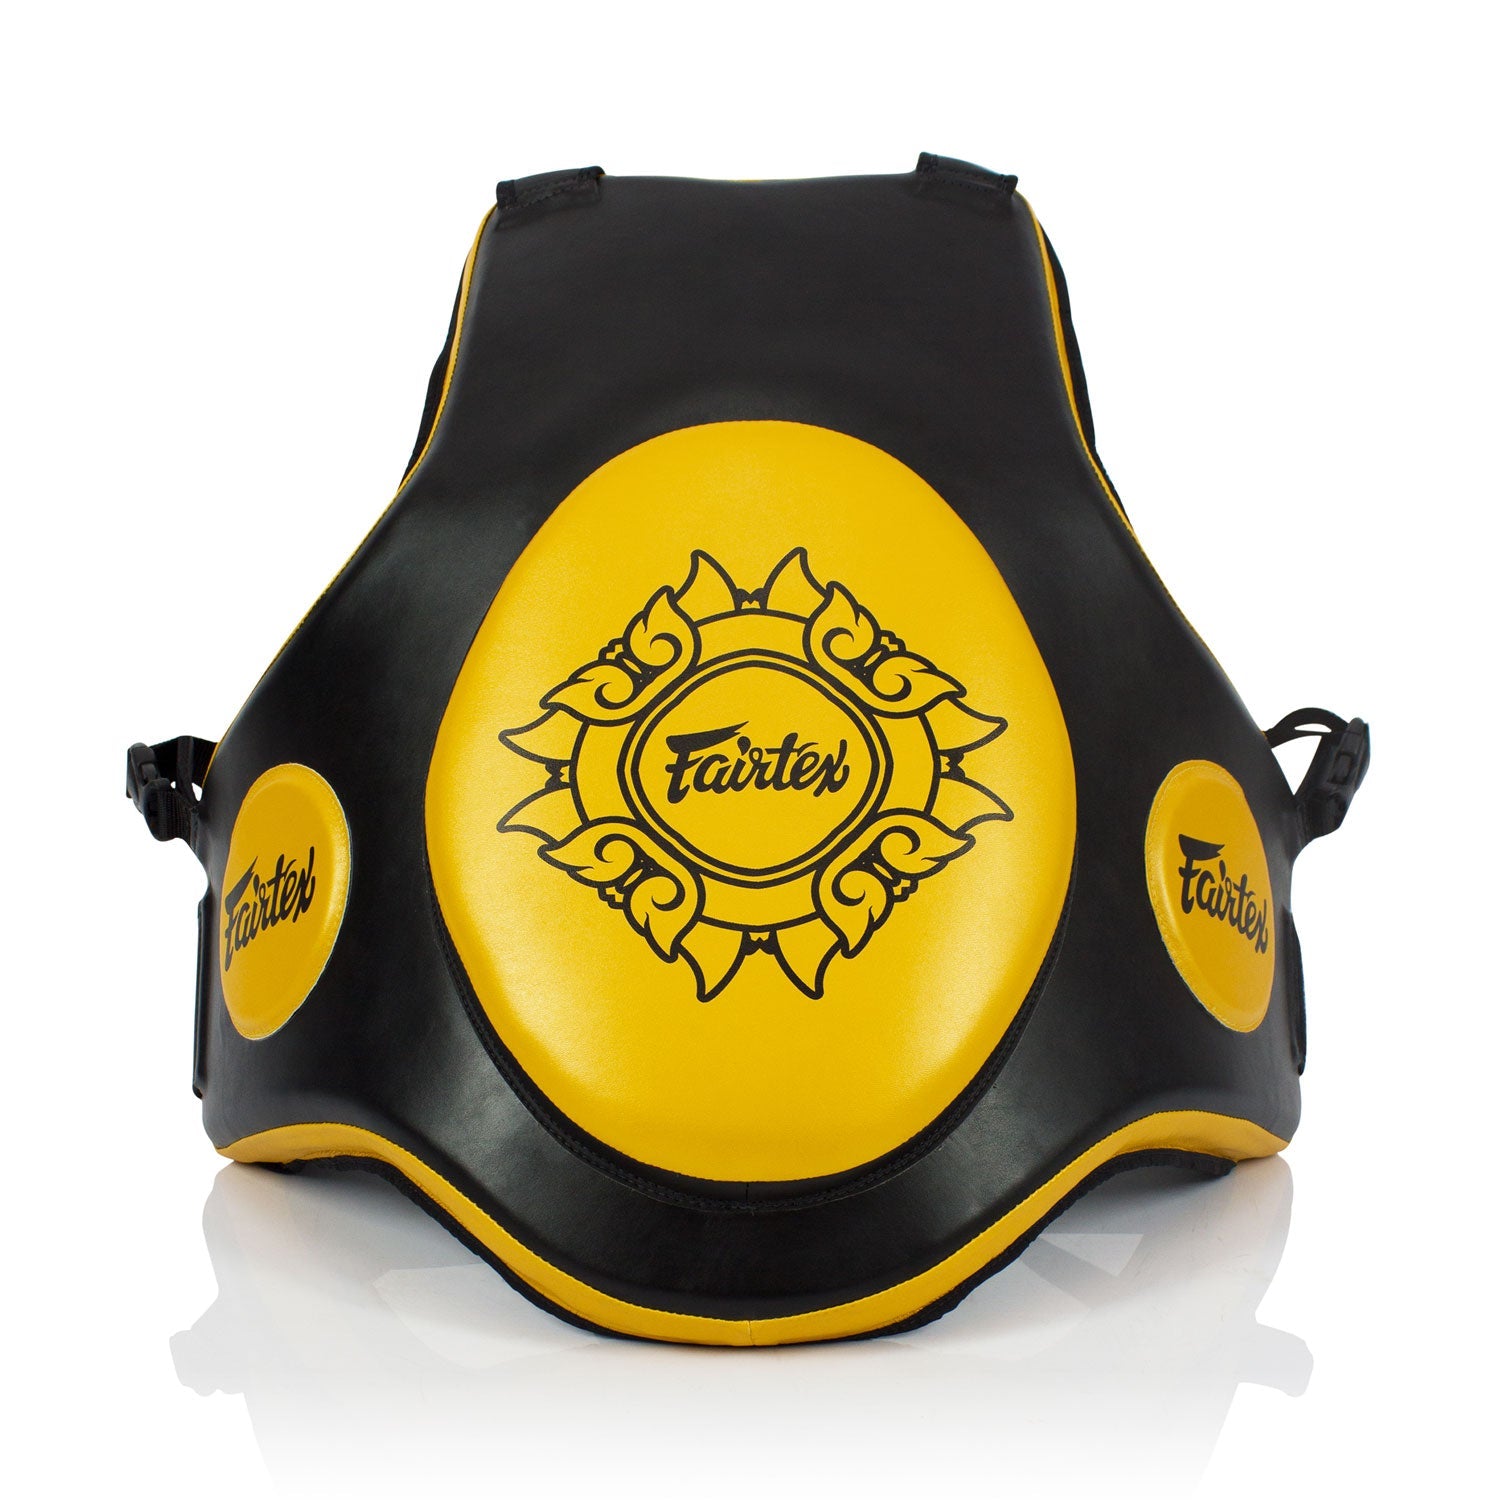 TV2 Fairtex Trainers Vest Black-Gold - Toprank Sport™